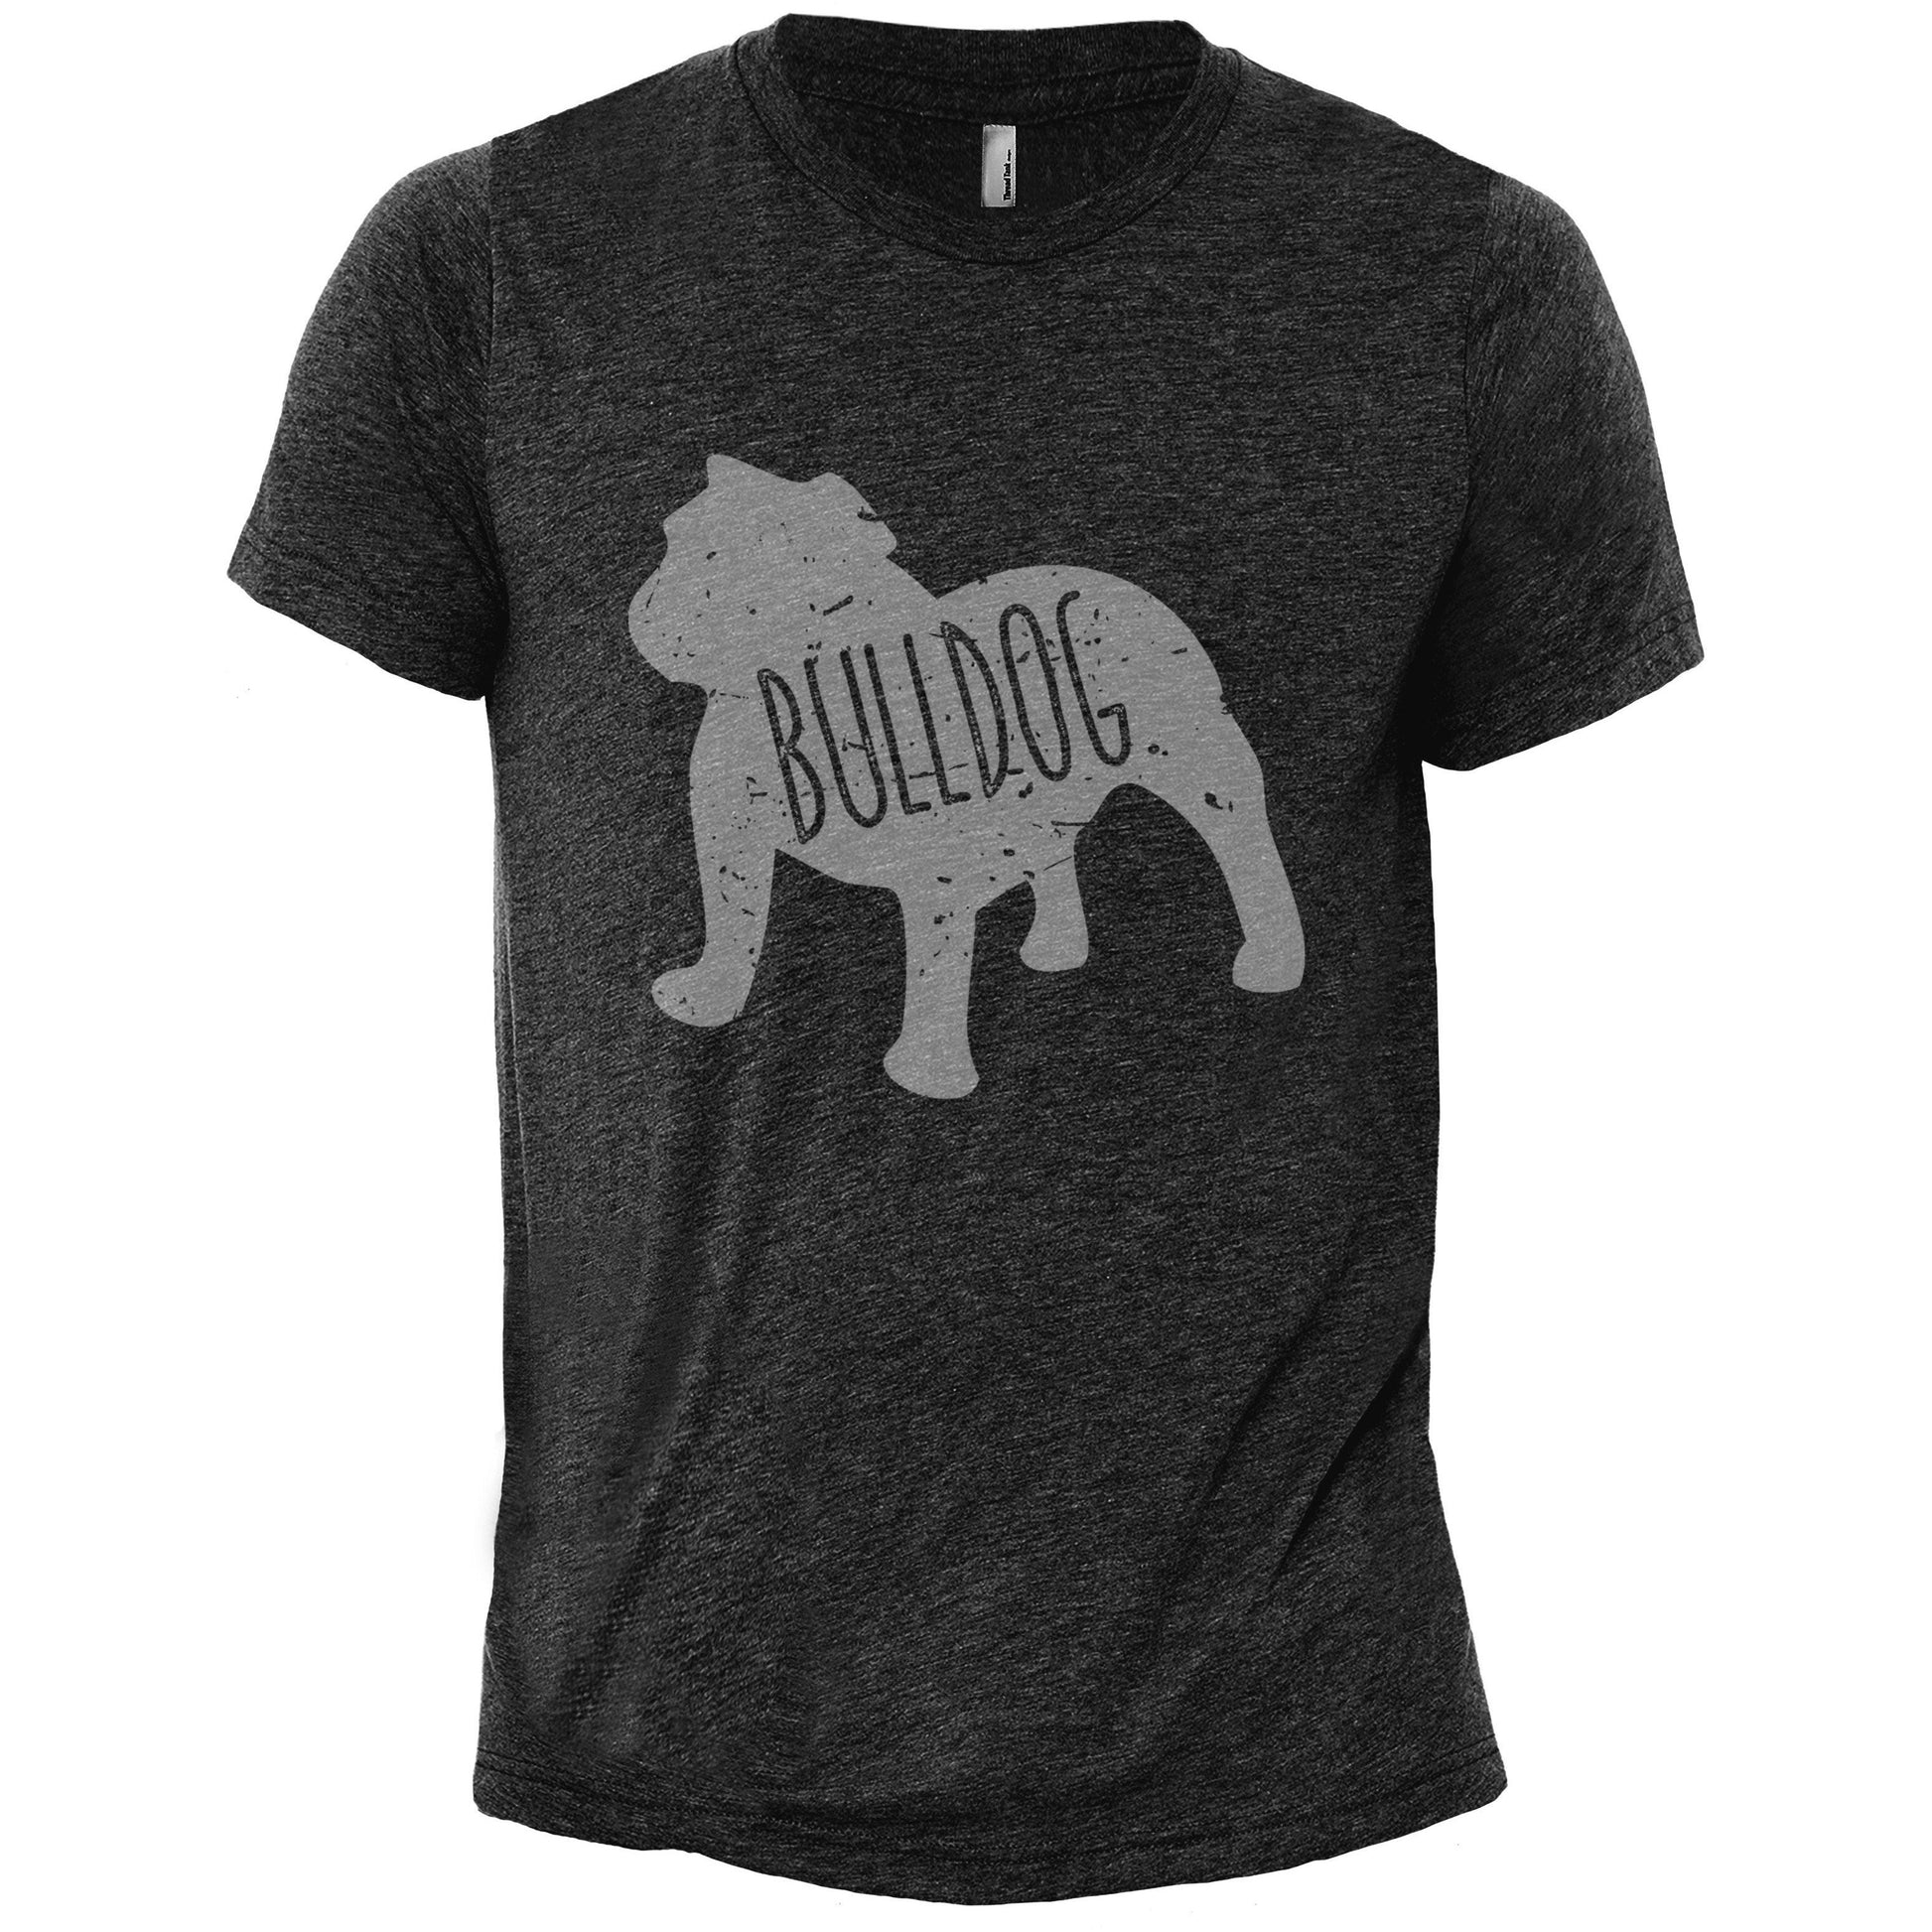 Bulldog Dog Silhouette Charcoal Printed Graphic Men's Crew T-Shirt Tee